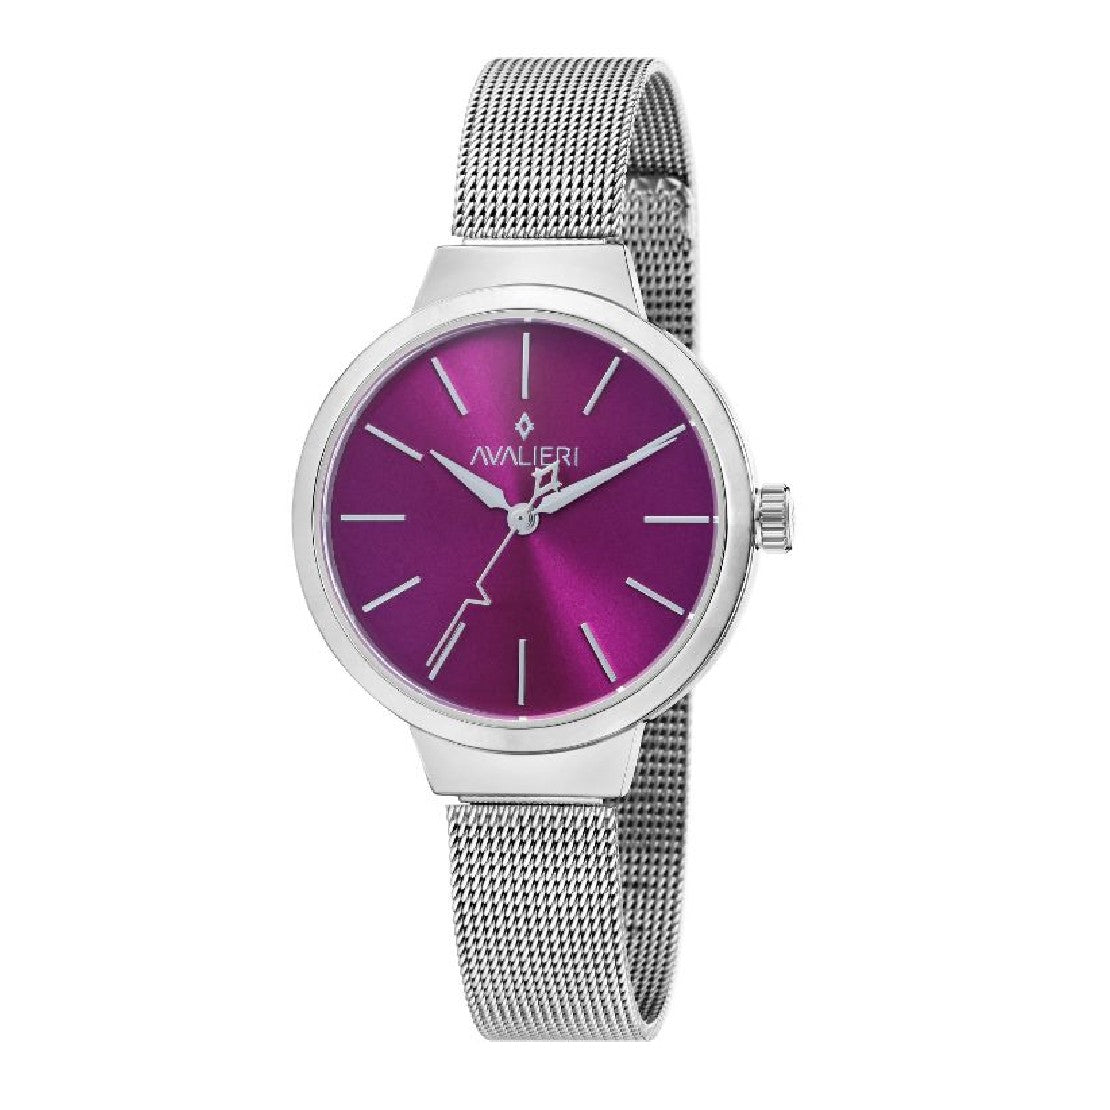 Avalieri Women's Quartz Watch Purple Dial - AV-2059B